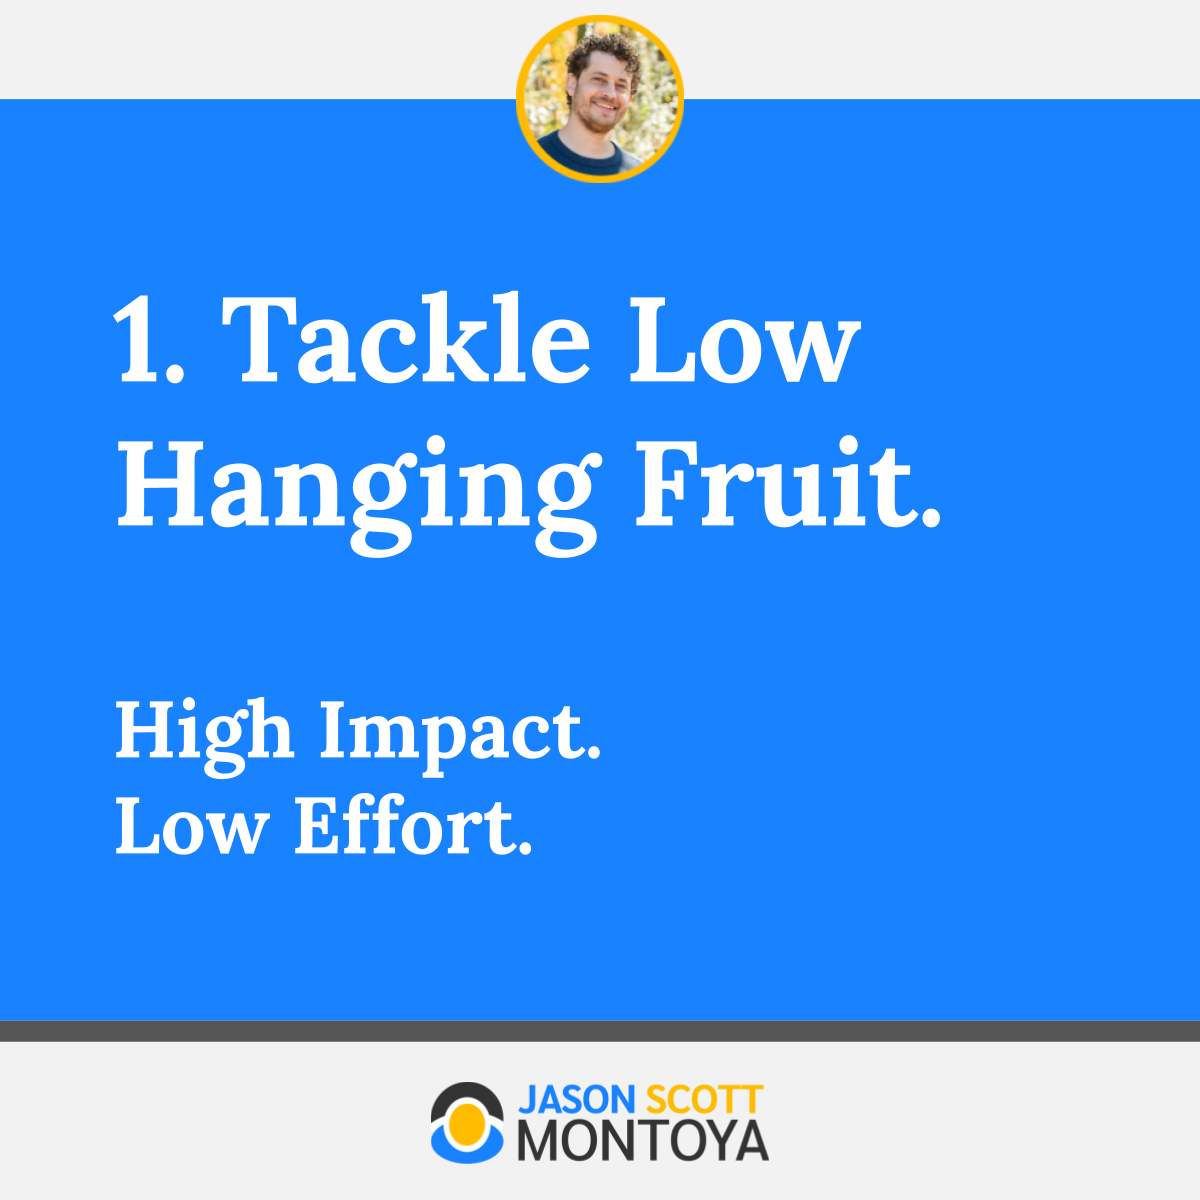 1. Tackle Low Hanging Fruit. High Impact. Low Effort.